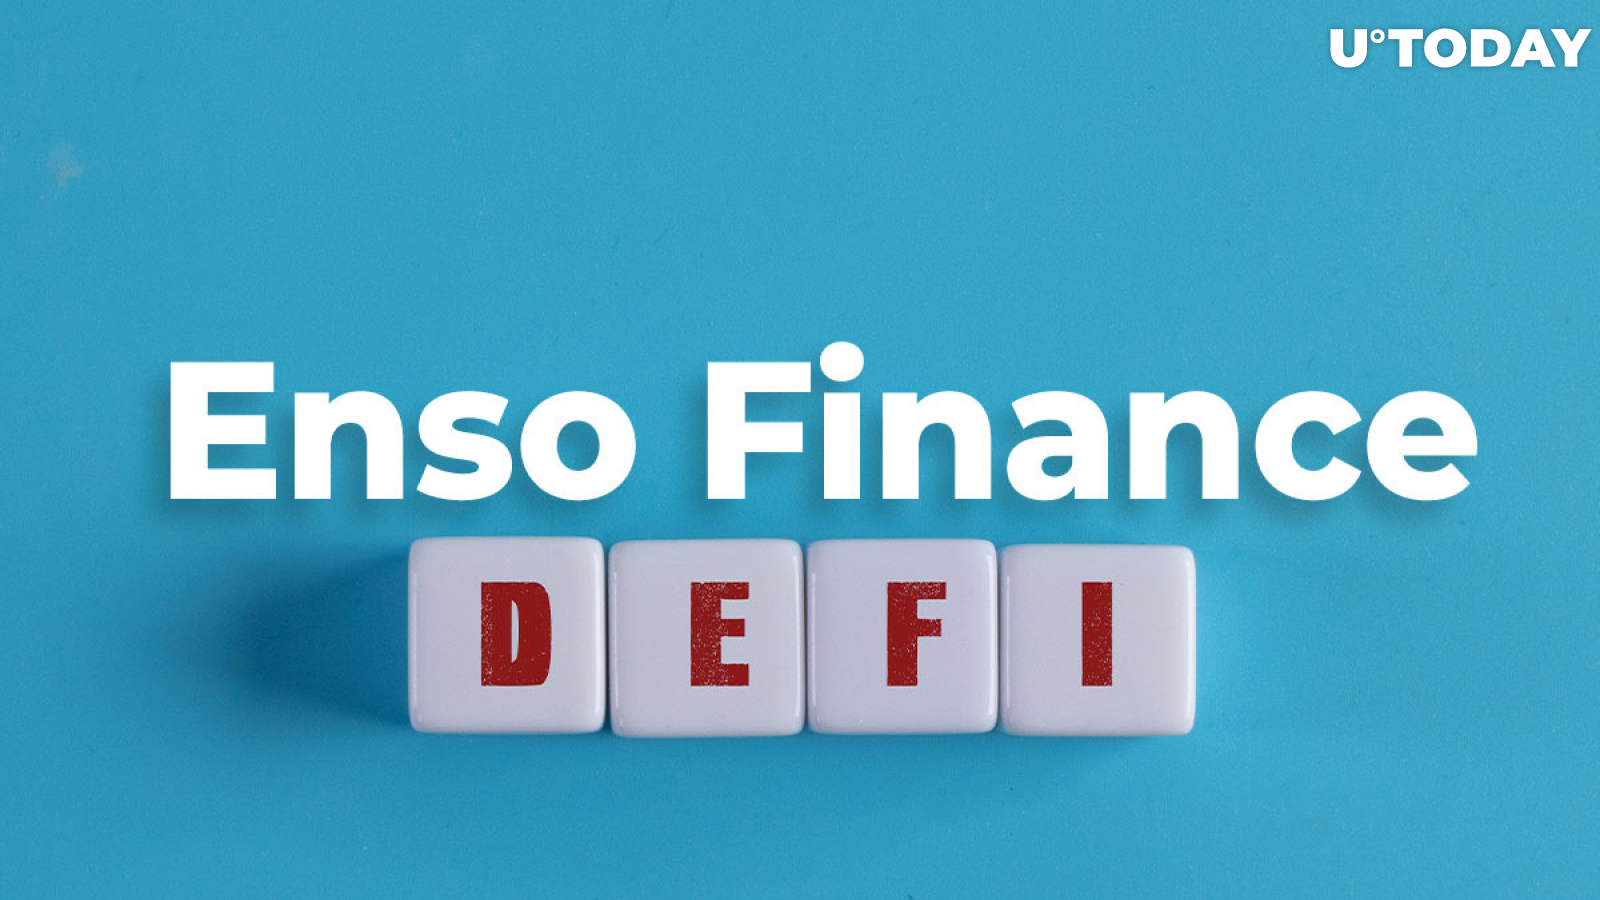 Enso Finance Raises $5 Million to Bring Social Trading to DeFi Segment